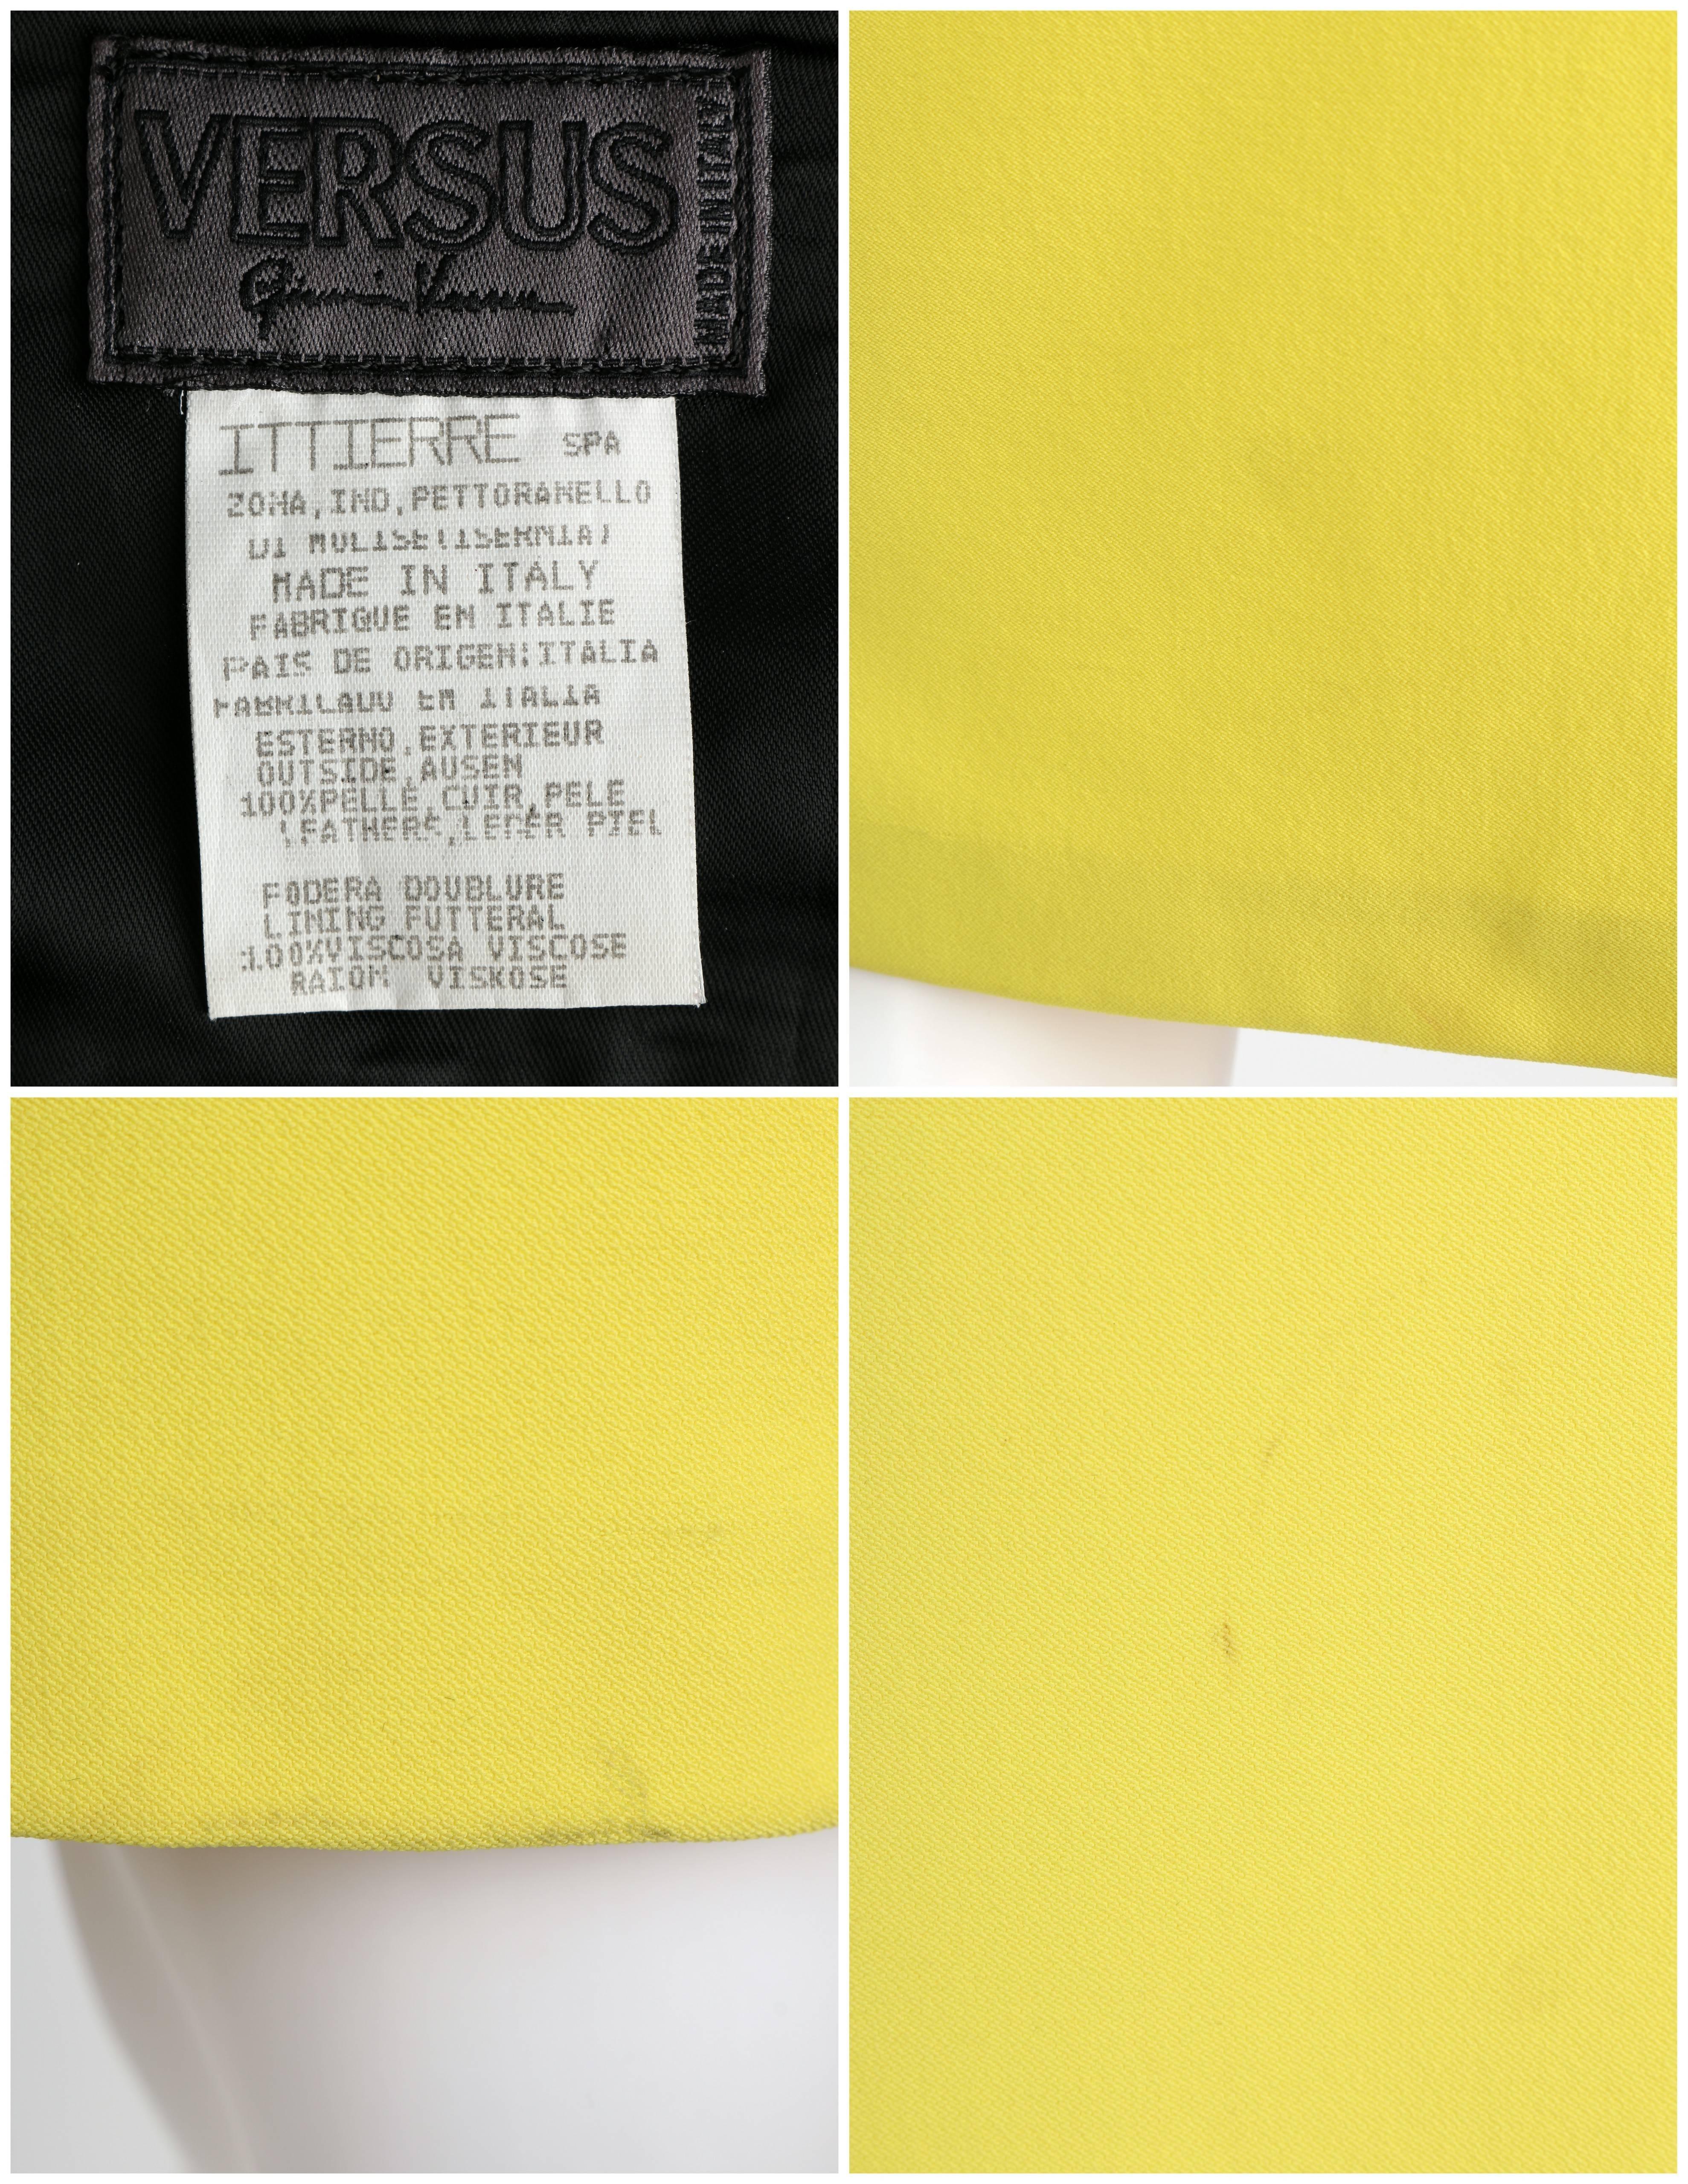 VERSUS GIANNI VERSACE c.1990 Yellow Black One Shoulder Dress Leather Bandeau Set 2